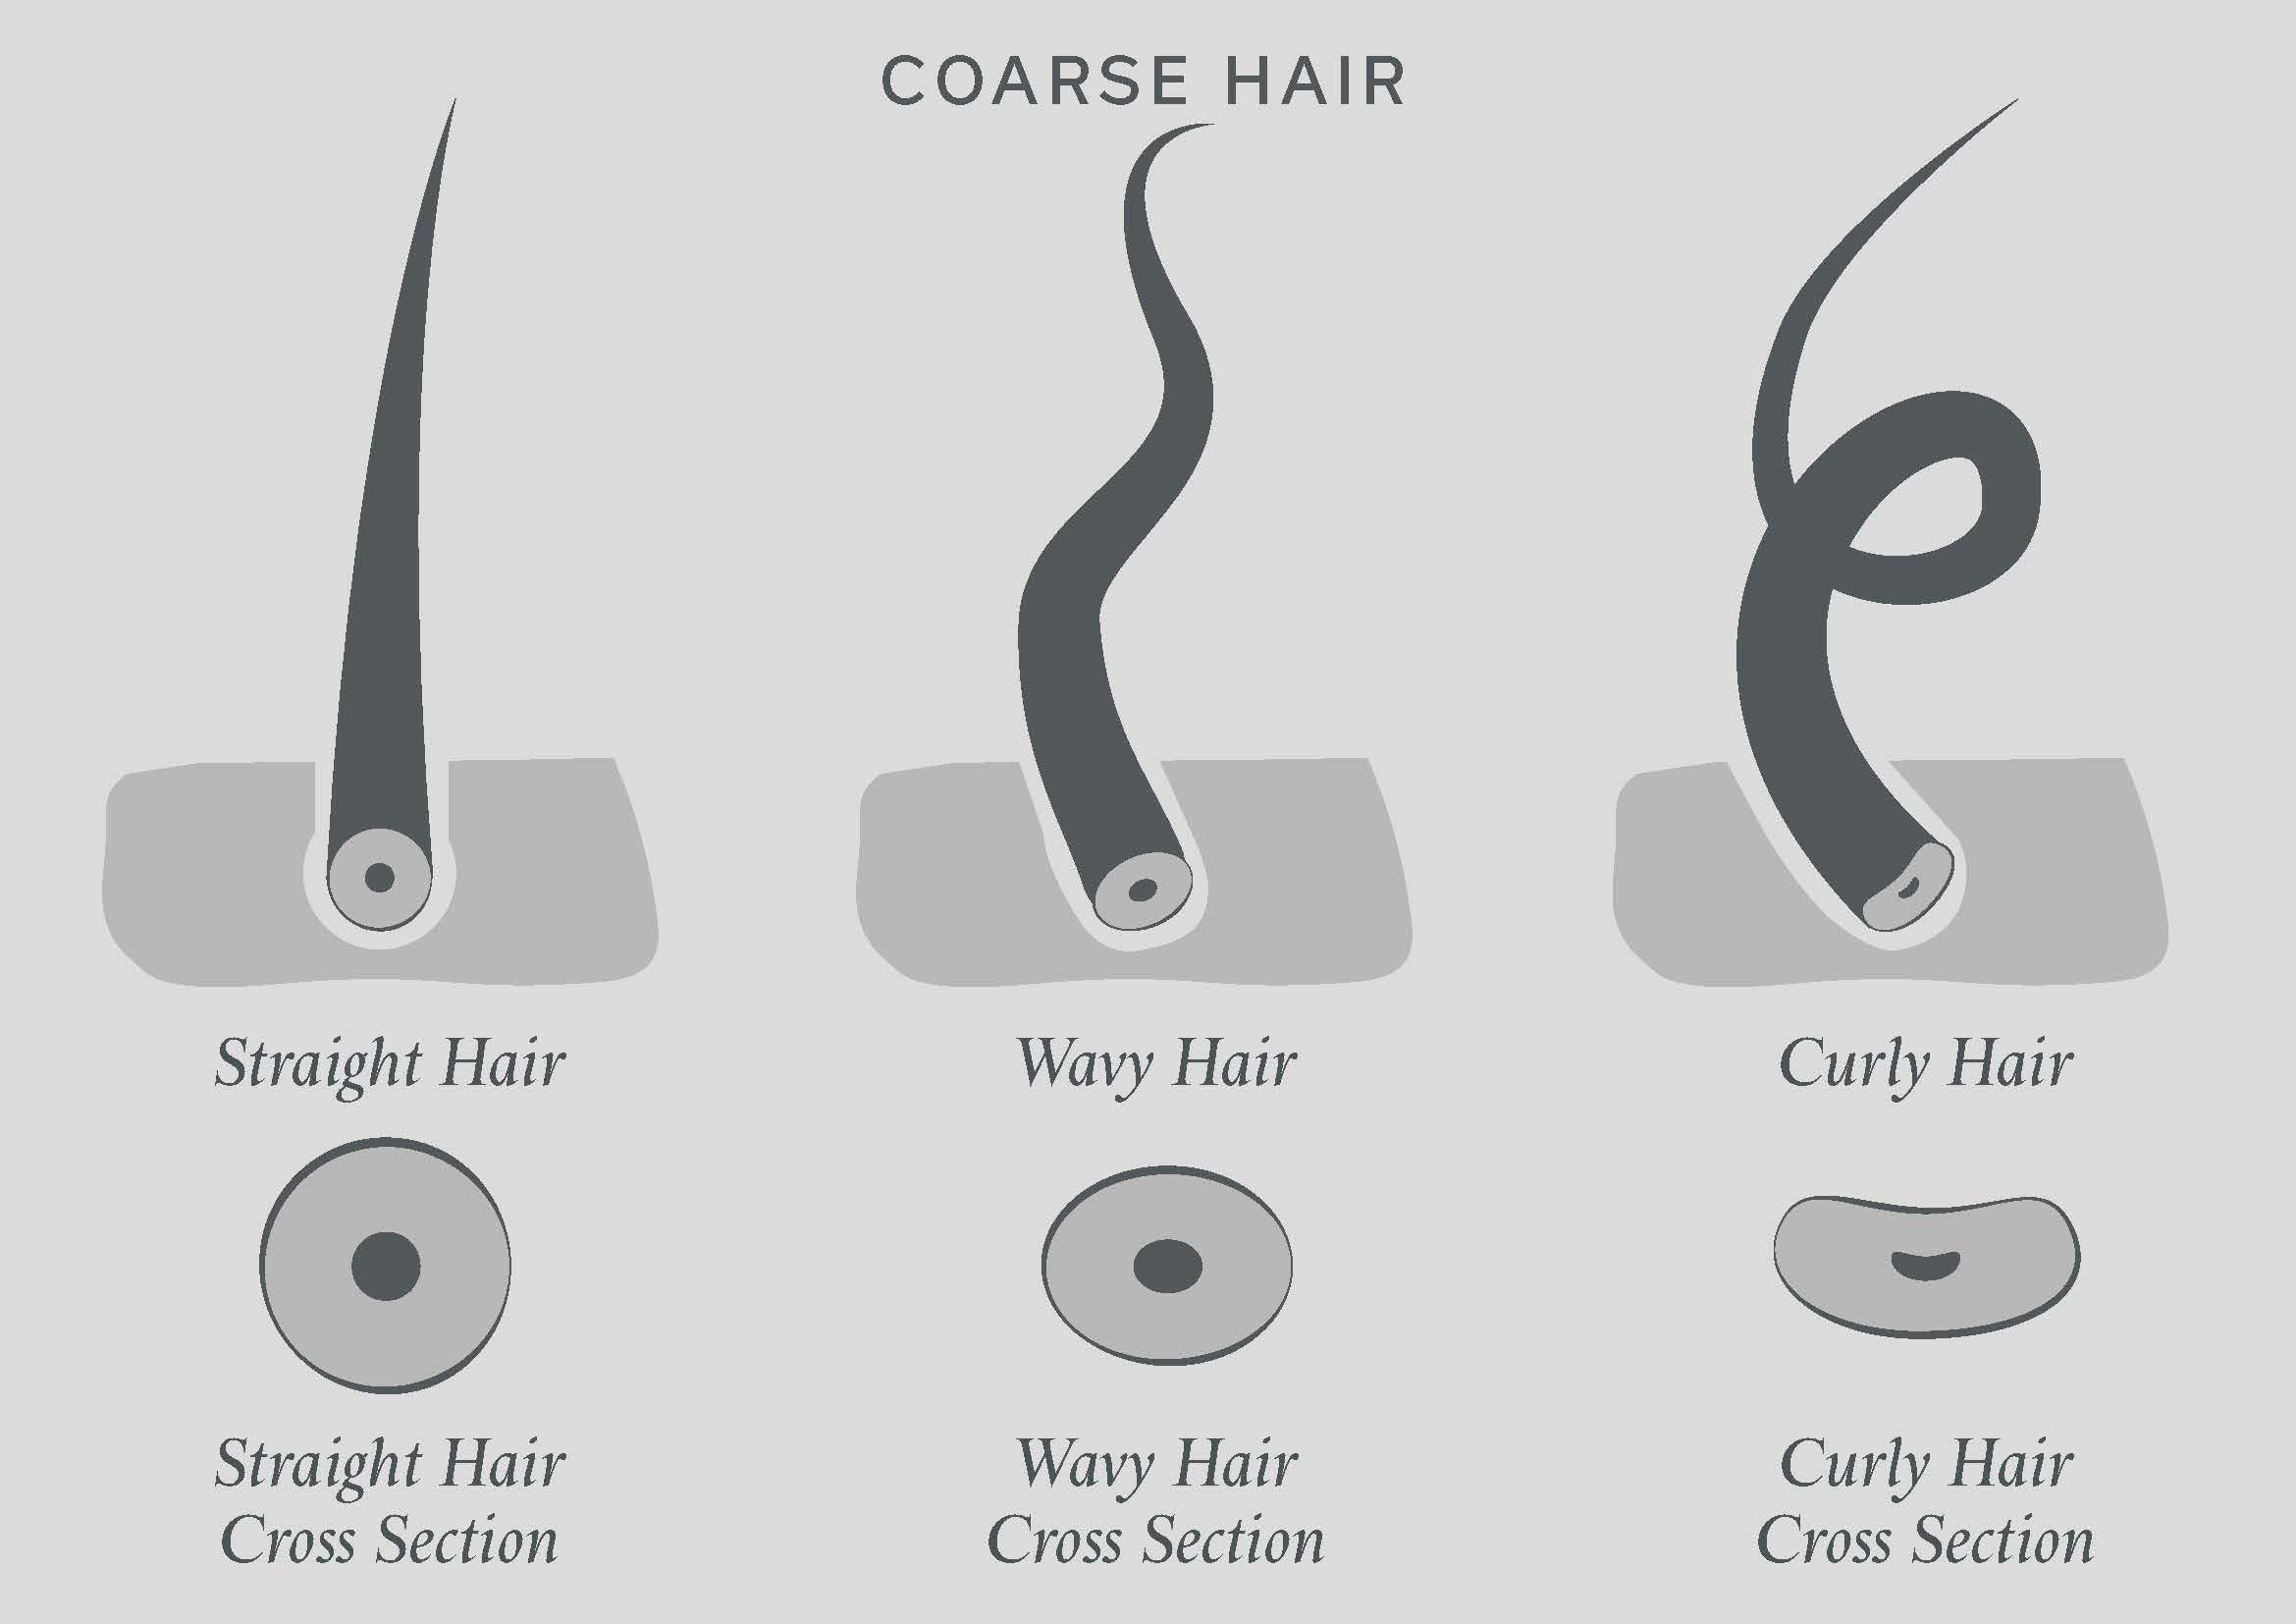 Hair Type Chart Men